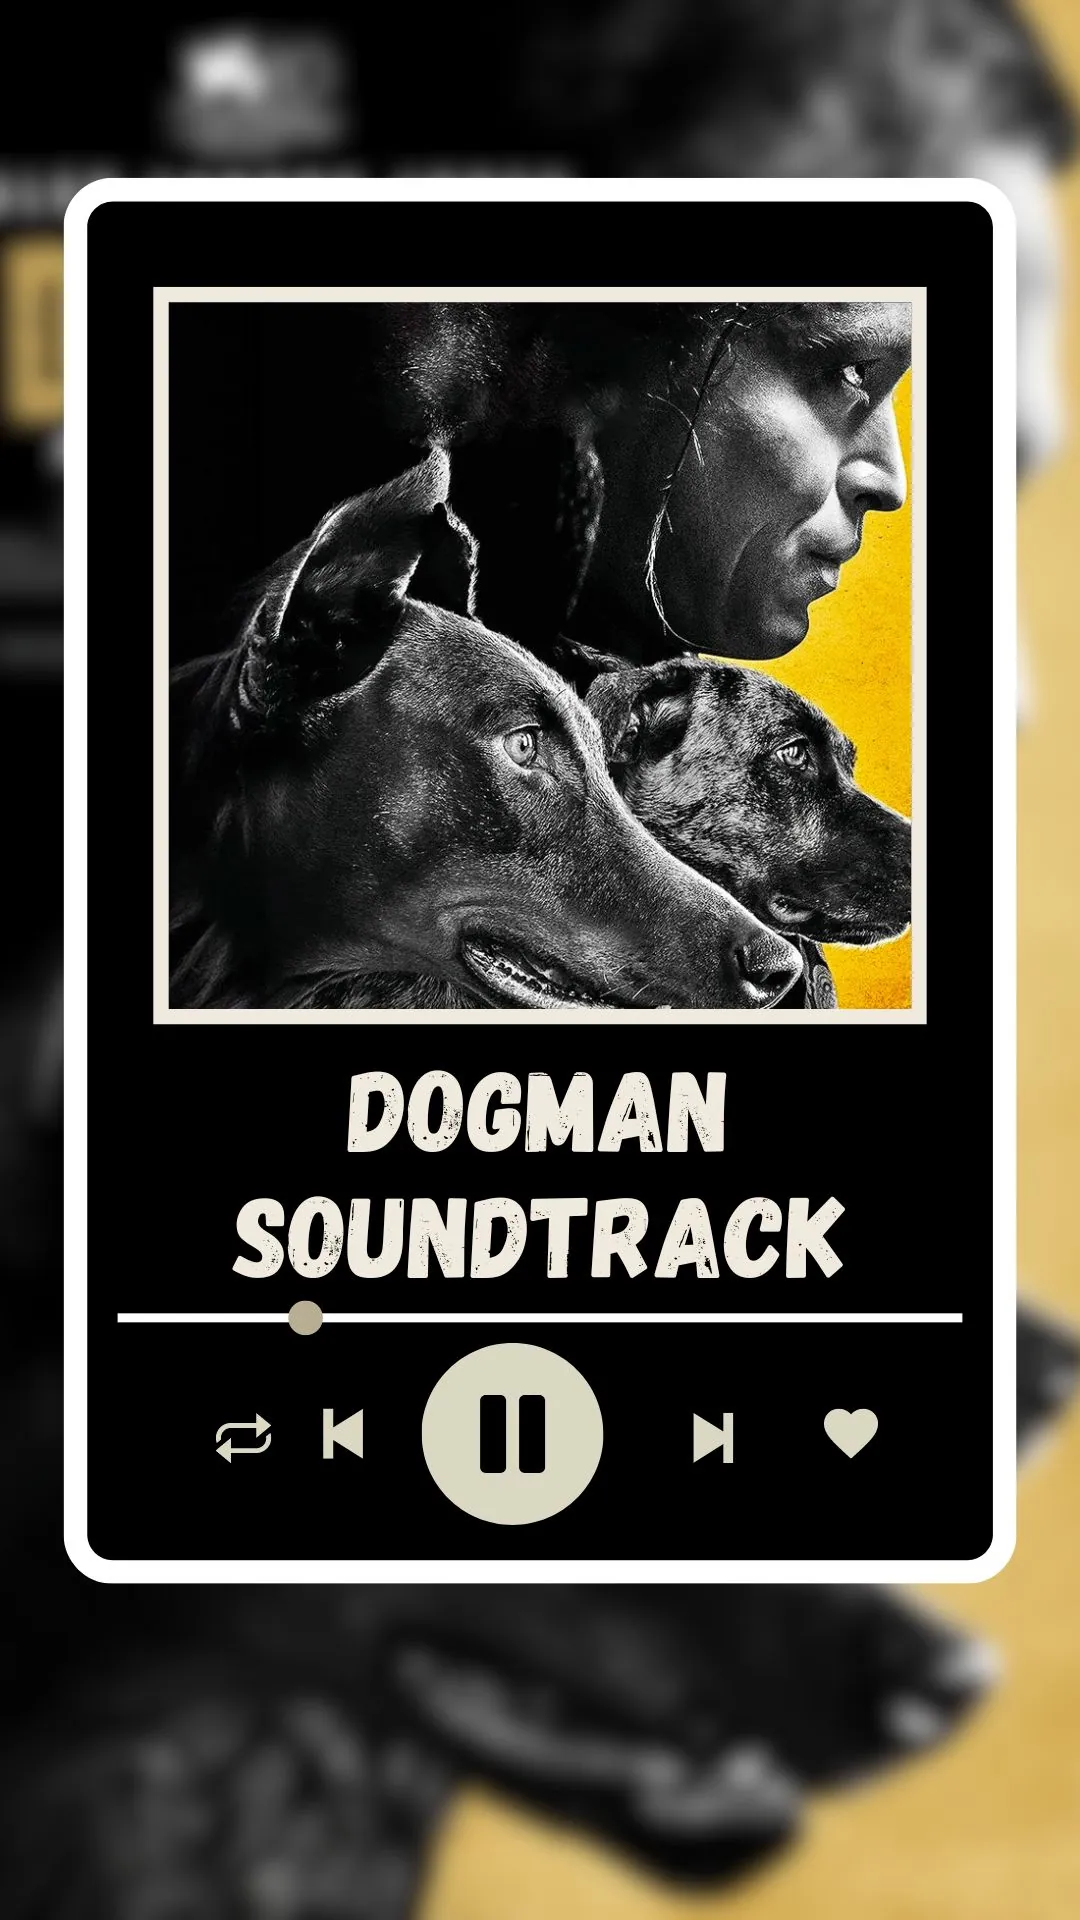 Dogman Soundtrack